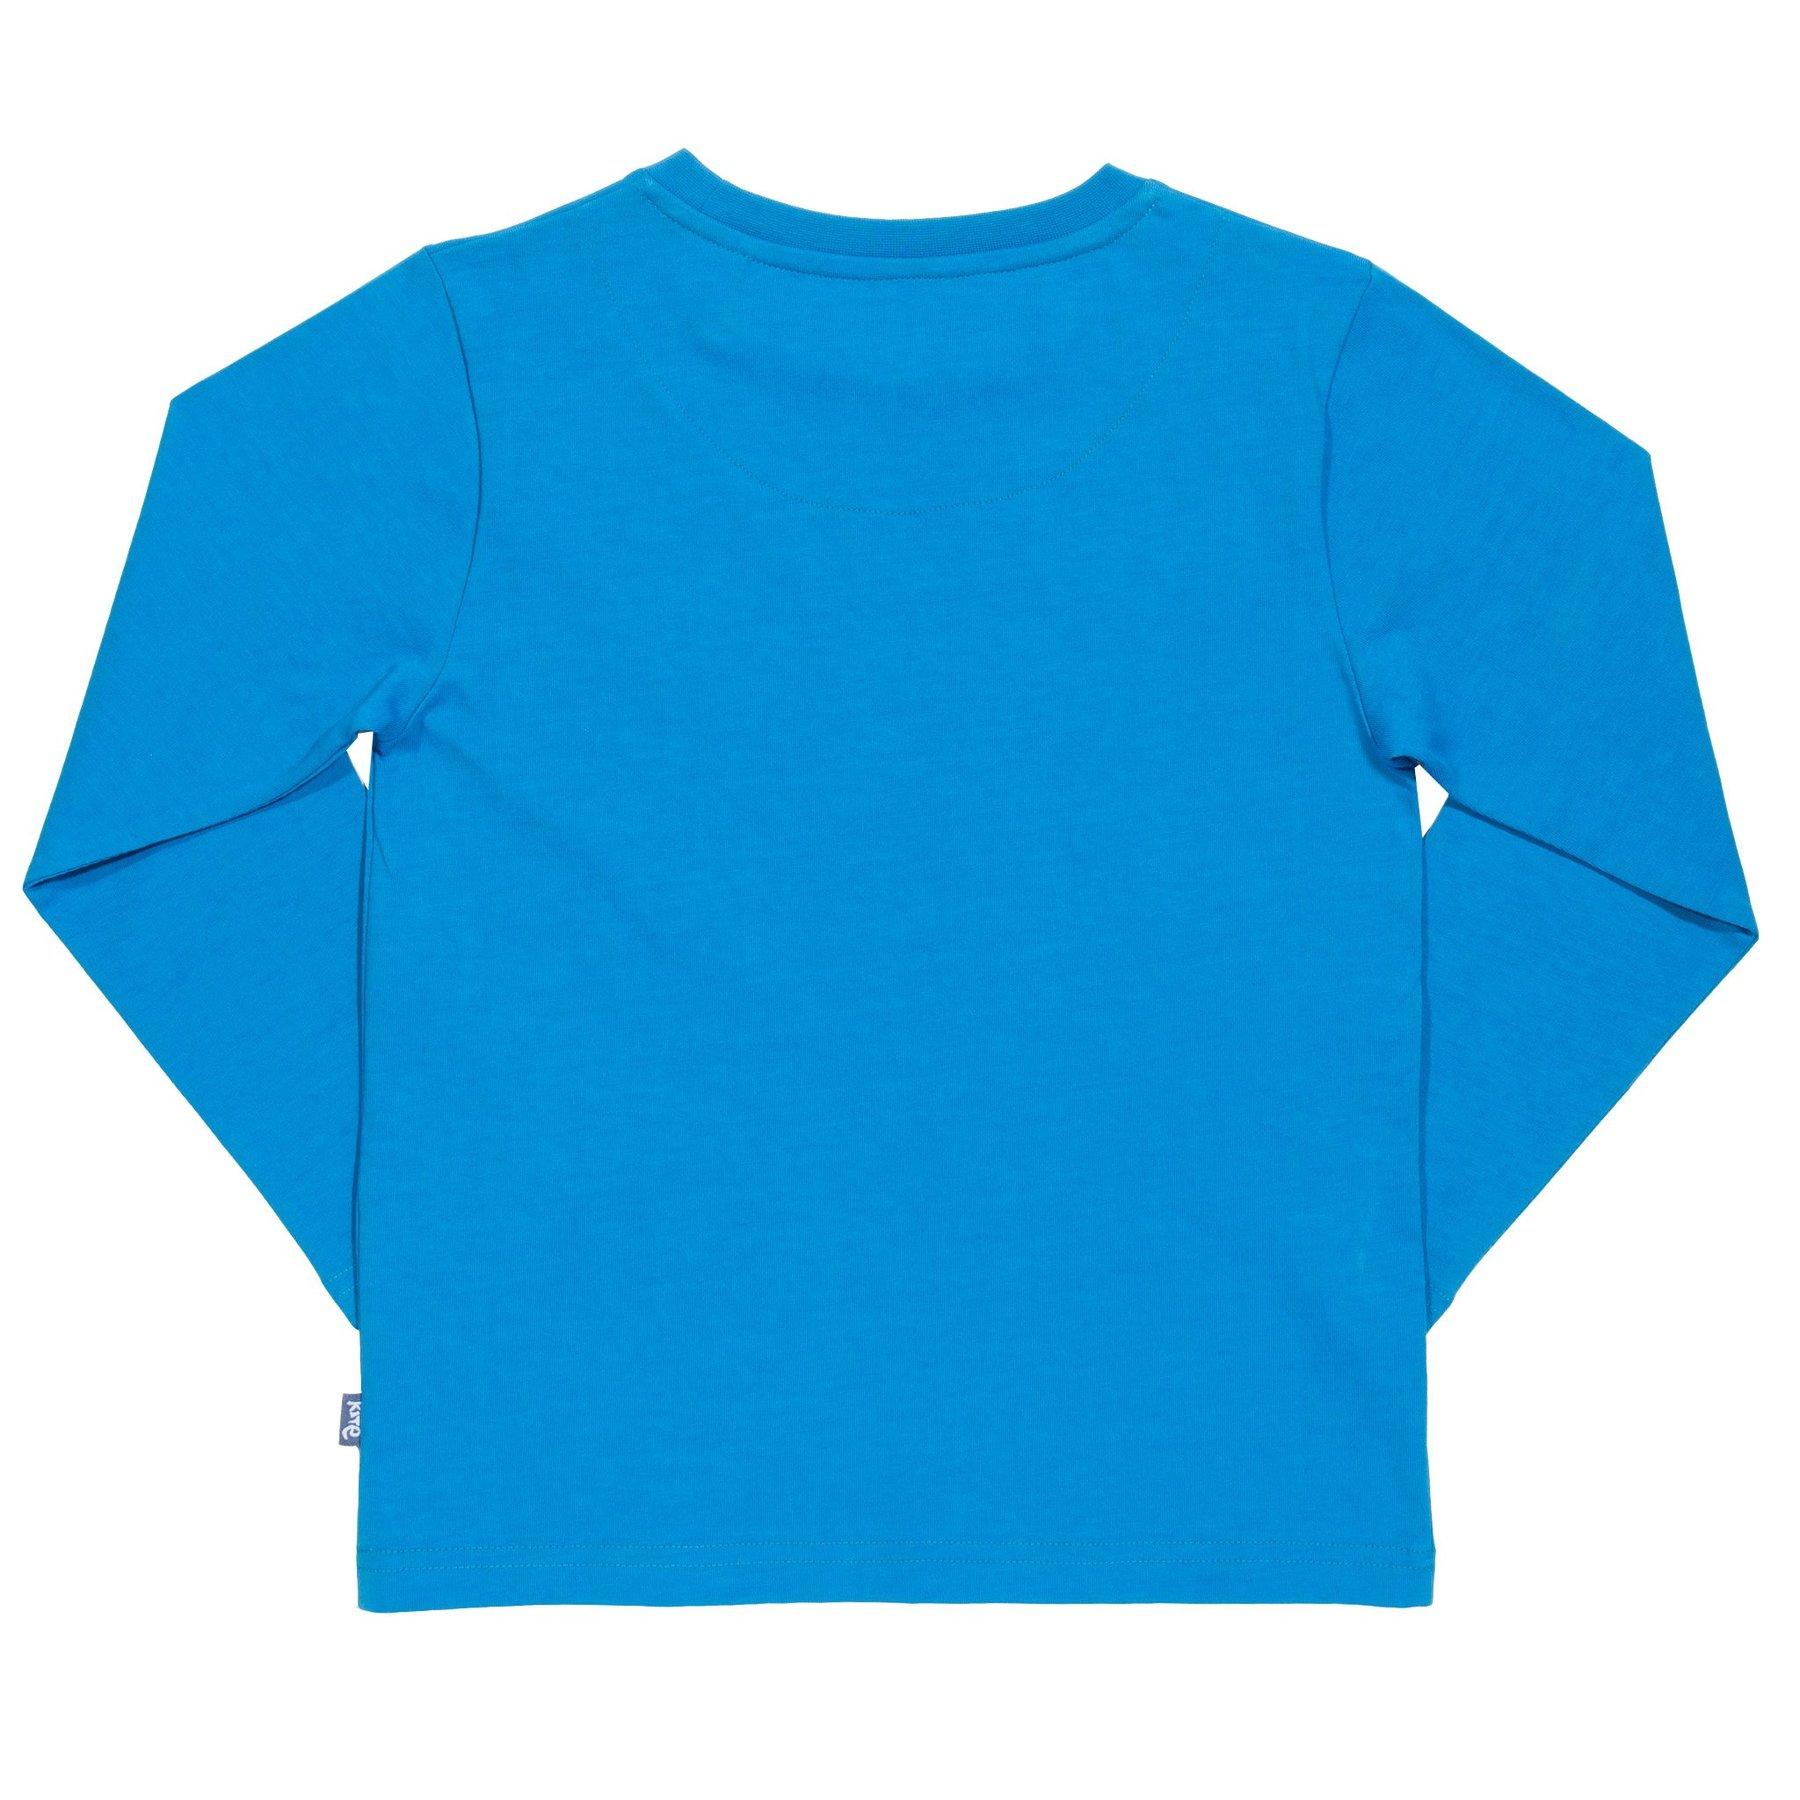 Kite Clothing Whale Evolution T-Shirt back